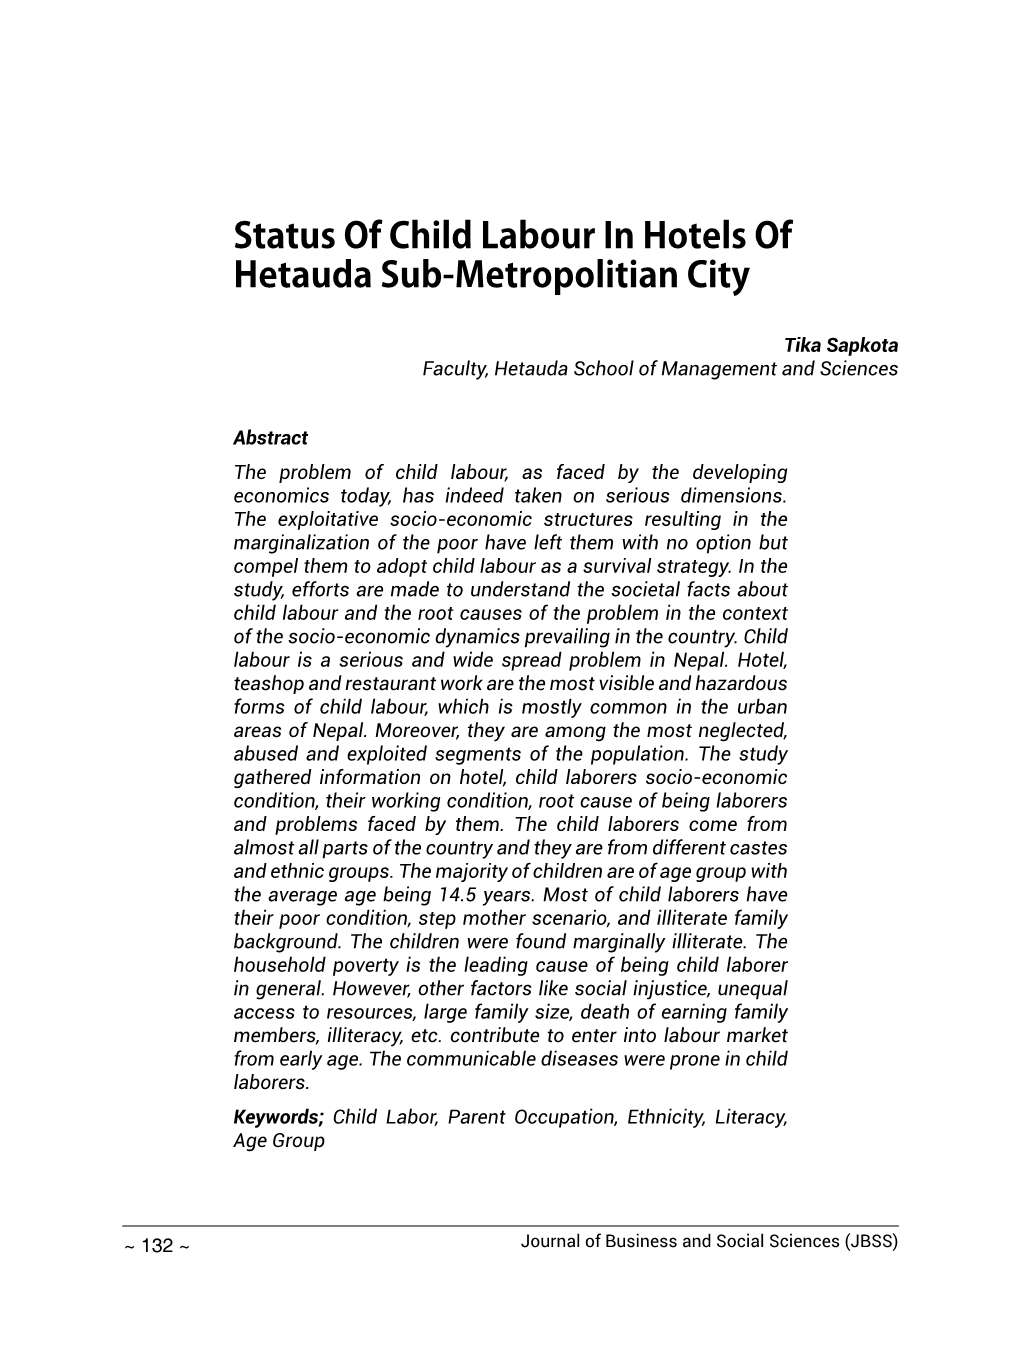 Status of Child Labour in Hotels of Hetauda Sub-Metropolitian City